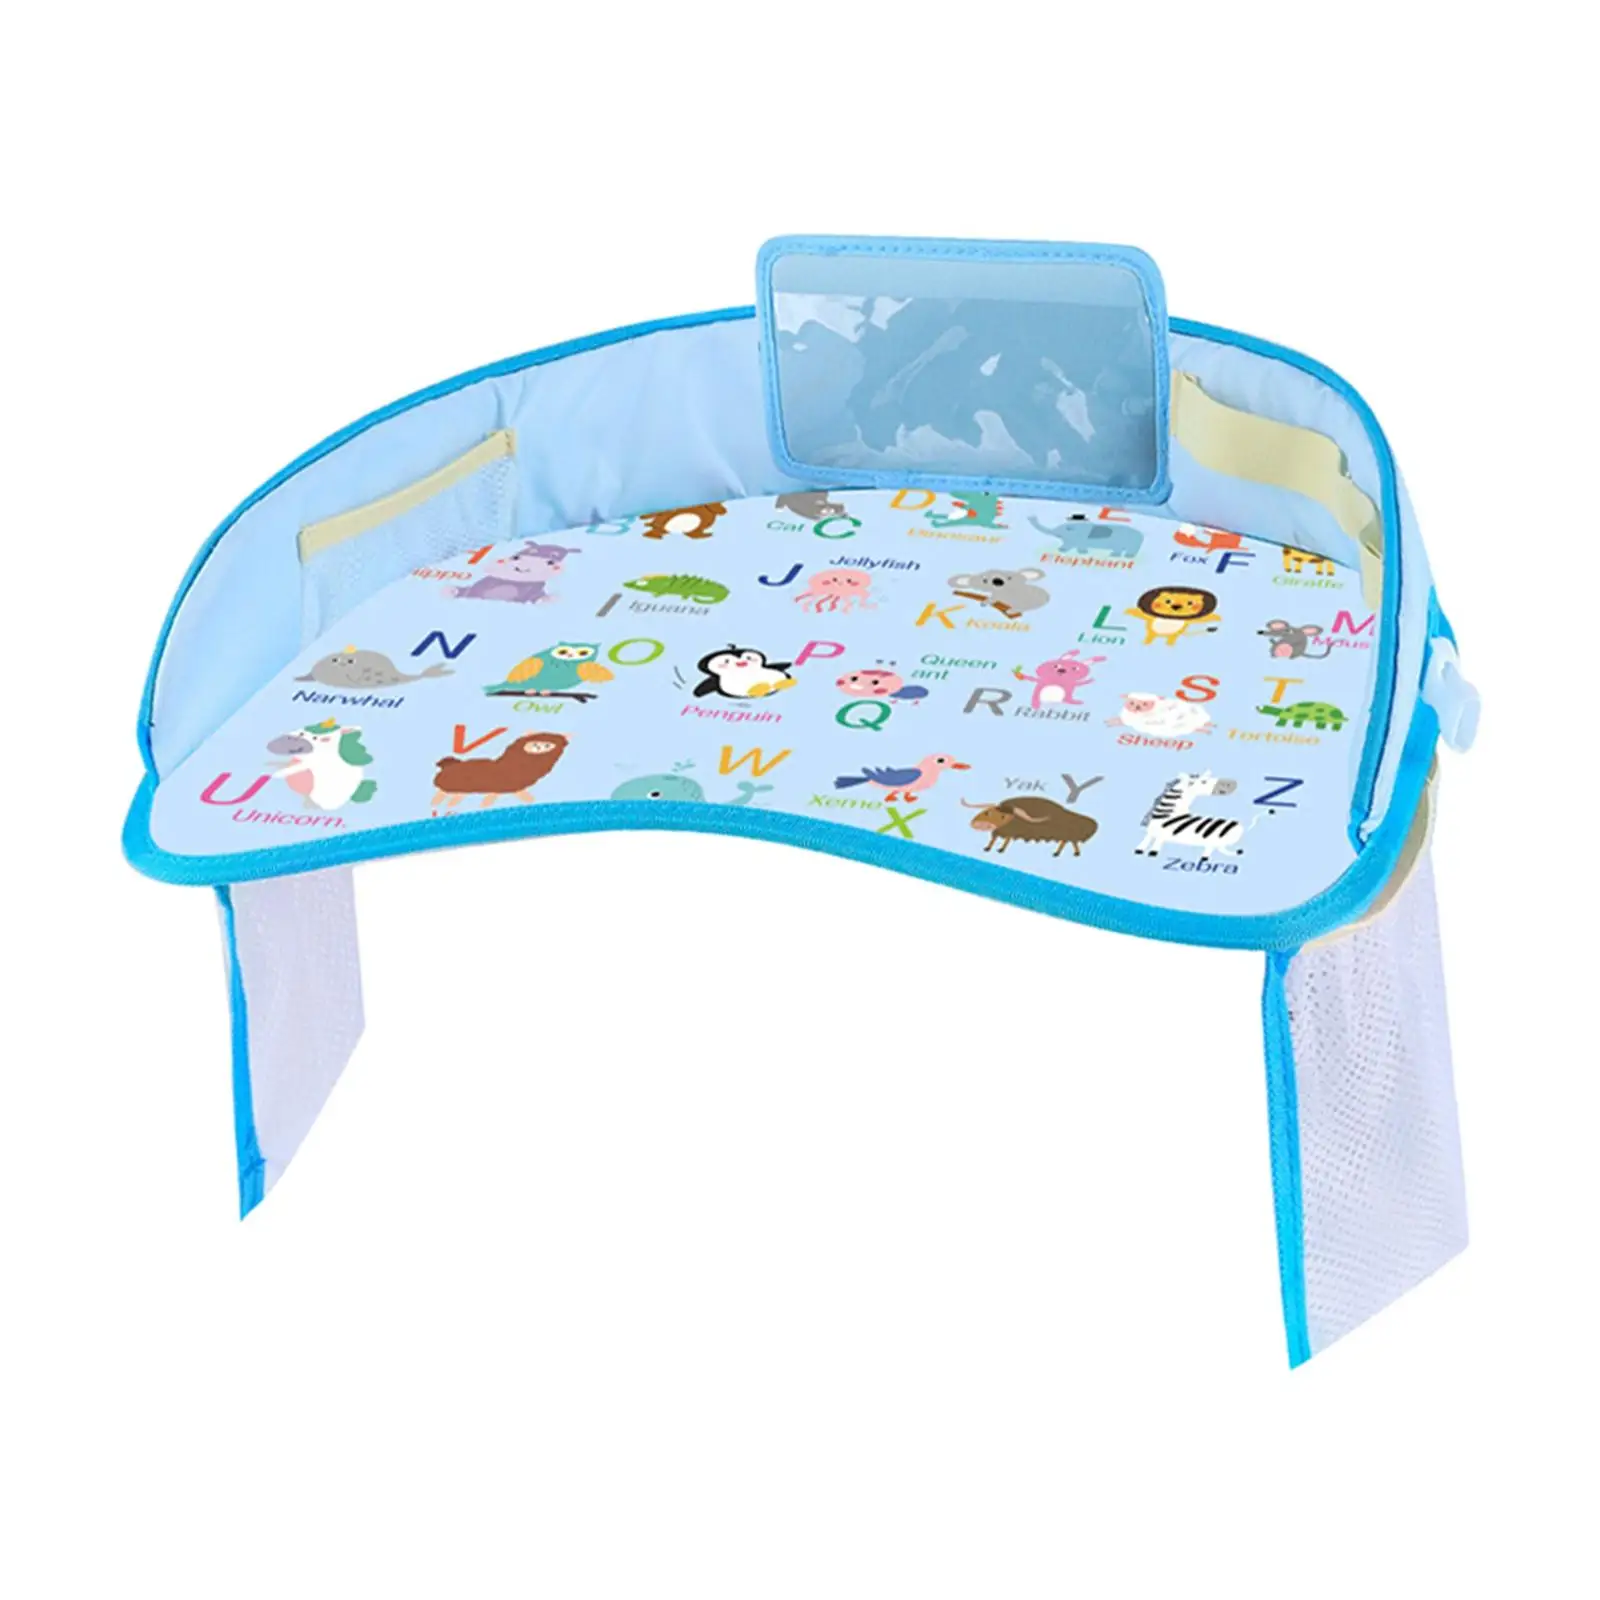 Toddler Lap Desk Organizer Car Seat Play Table Waterproof Kids Car Tray for Road Trip Stroller Airplane Baby Toddler